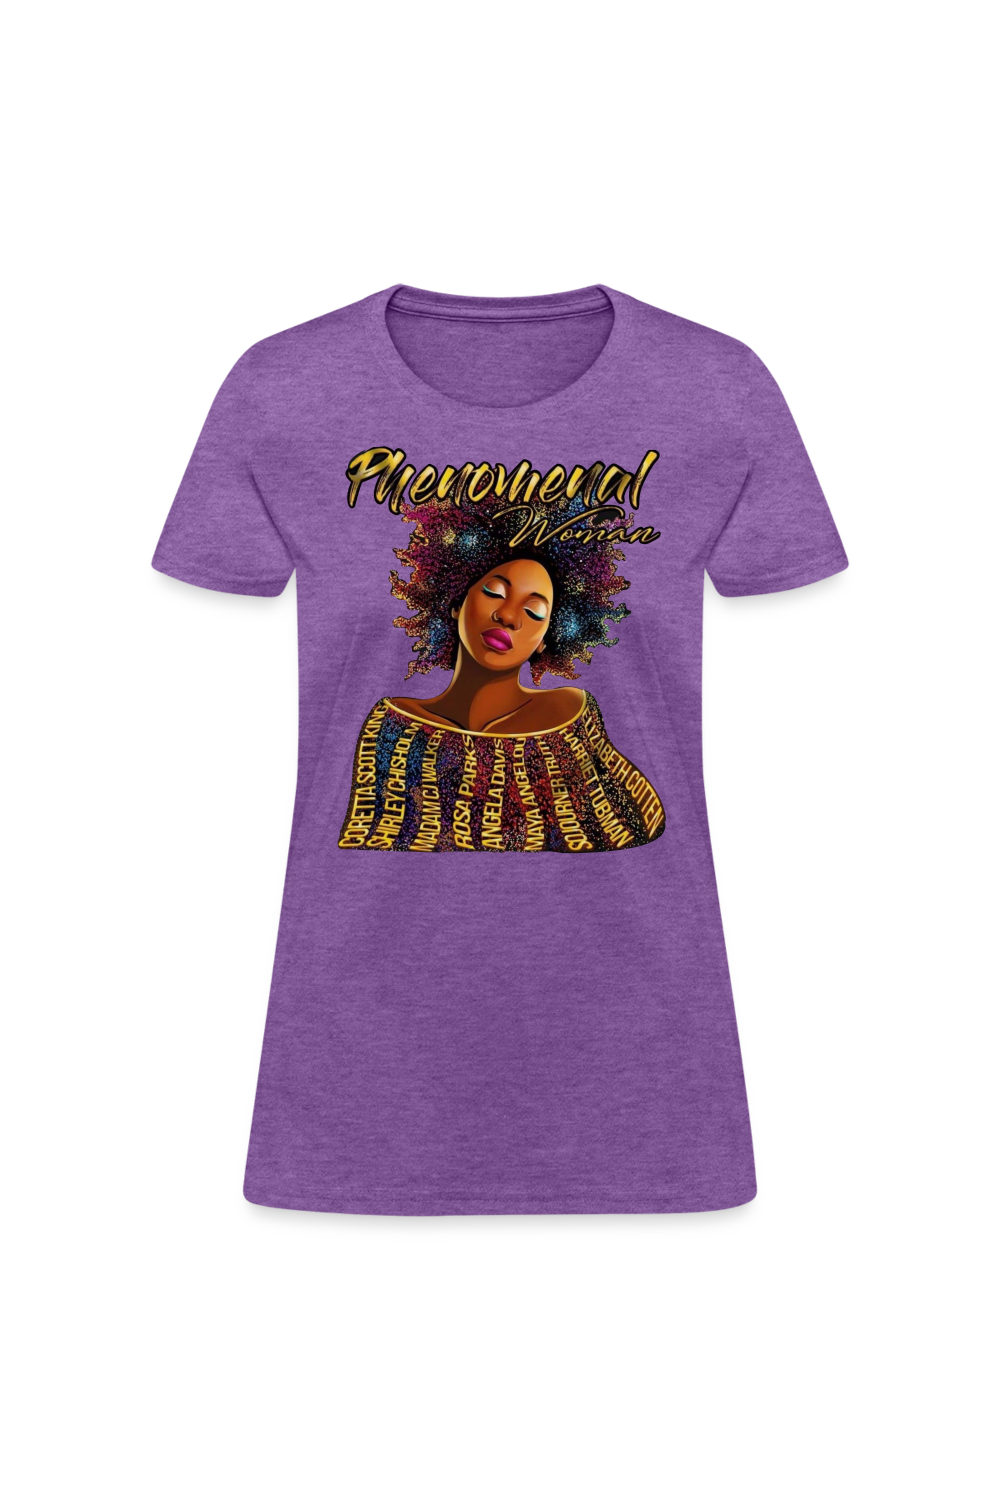 African American Women's Phenomenal Woman Short Sleeve T-Shirt - purple heather